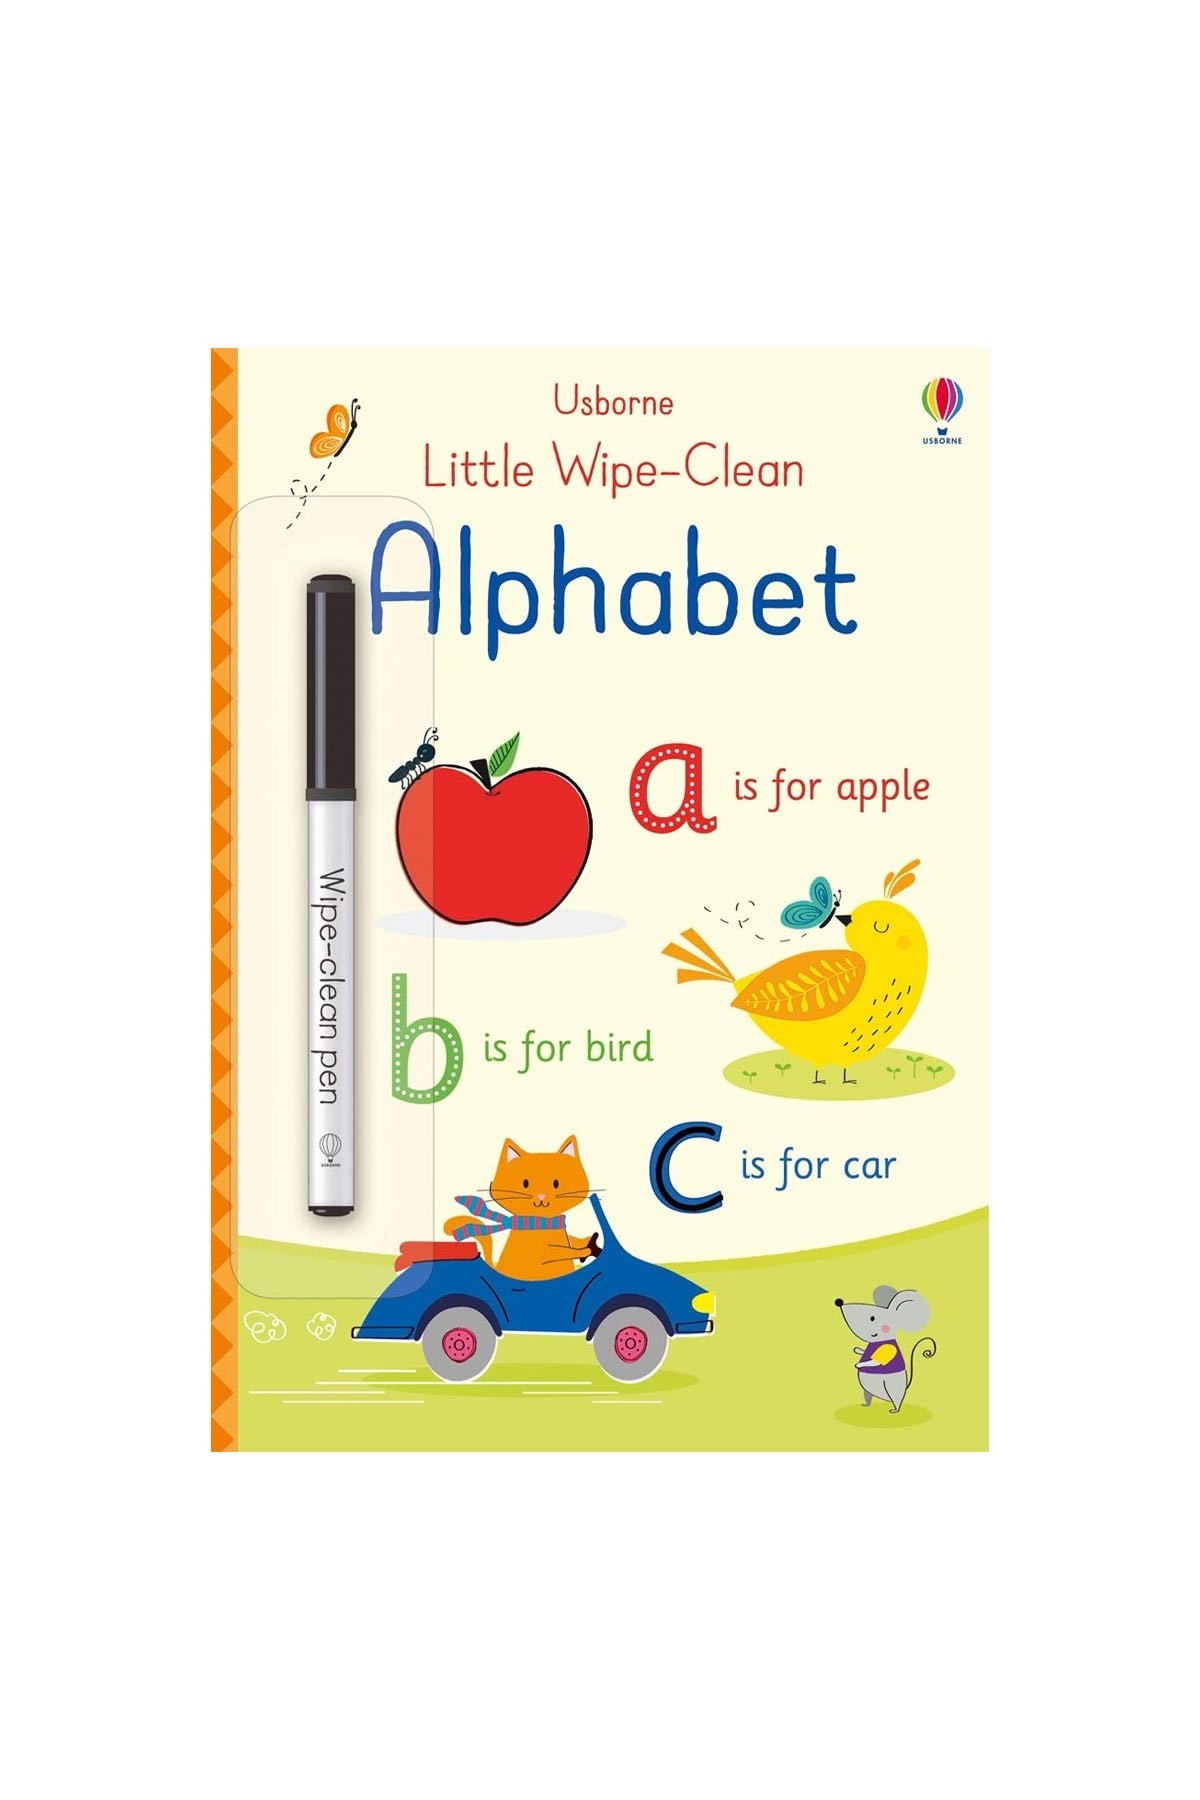 The Usborne Little Wipe-Clean Alphabet